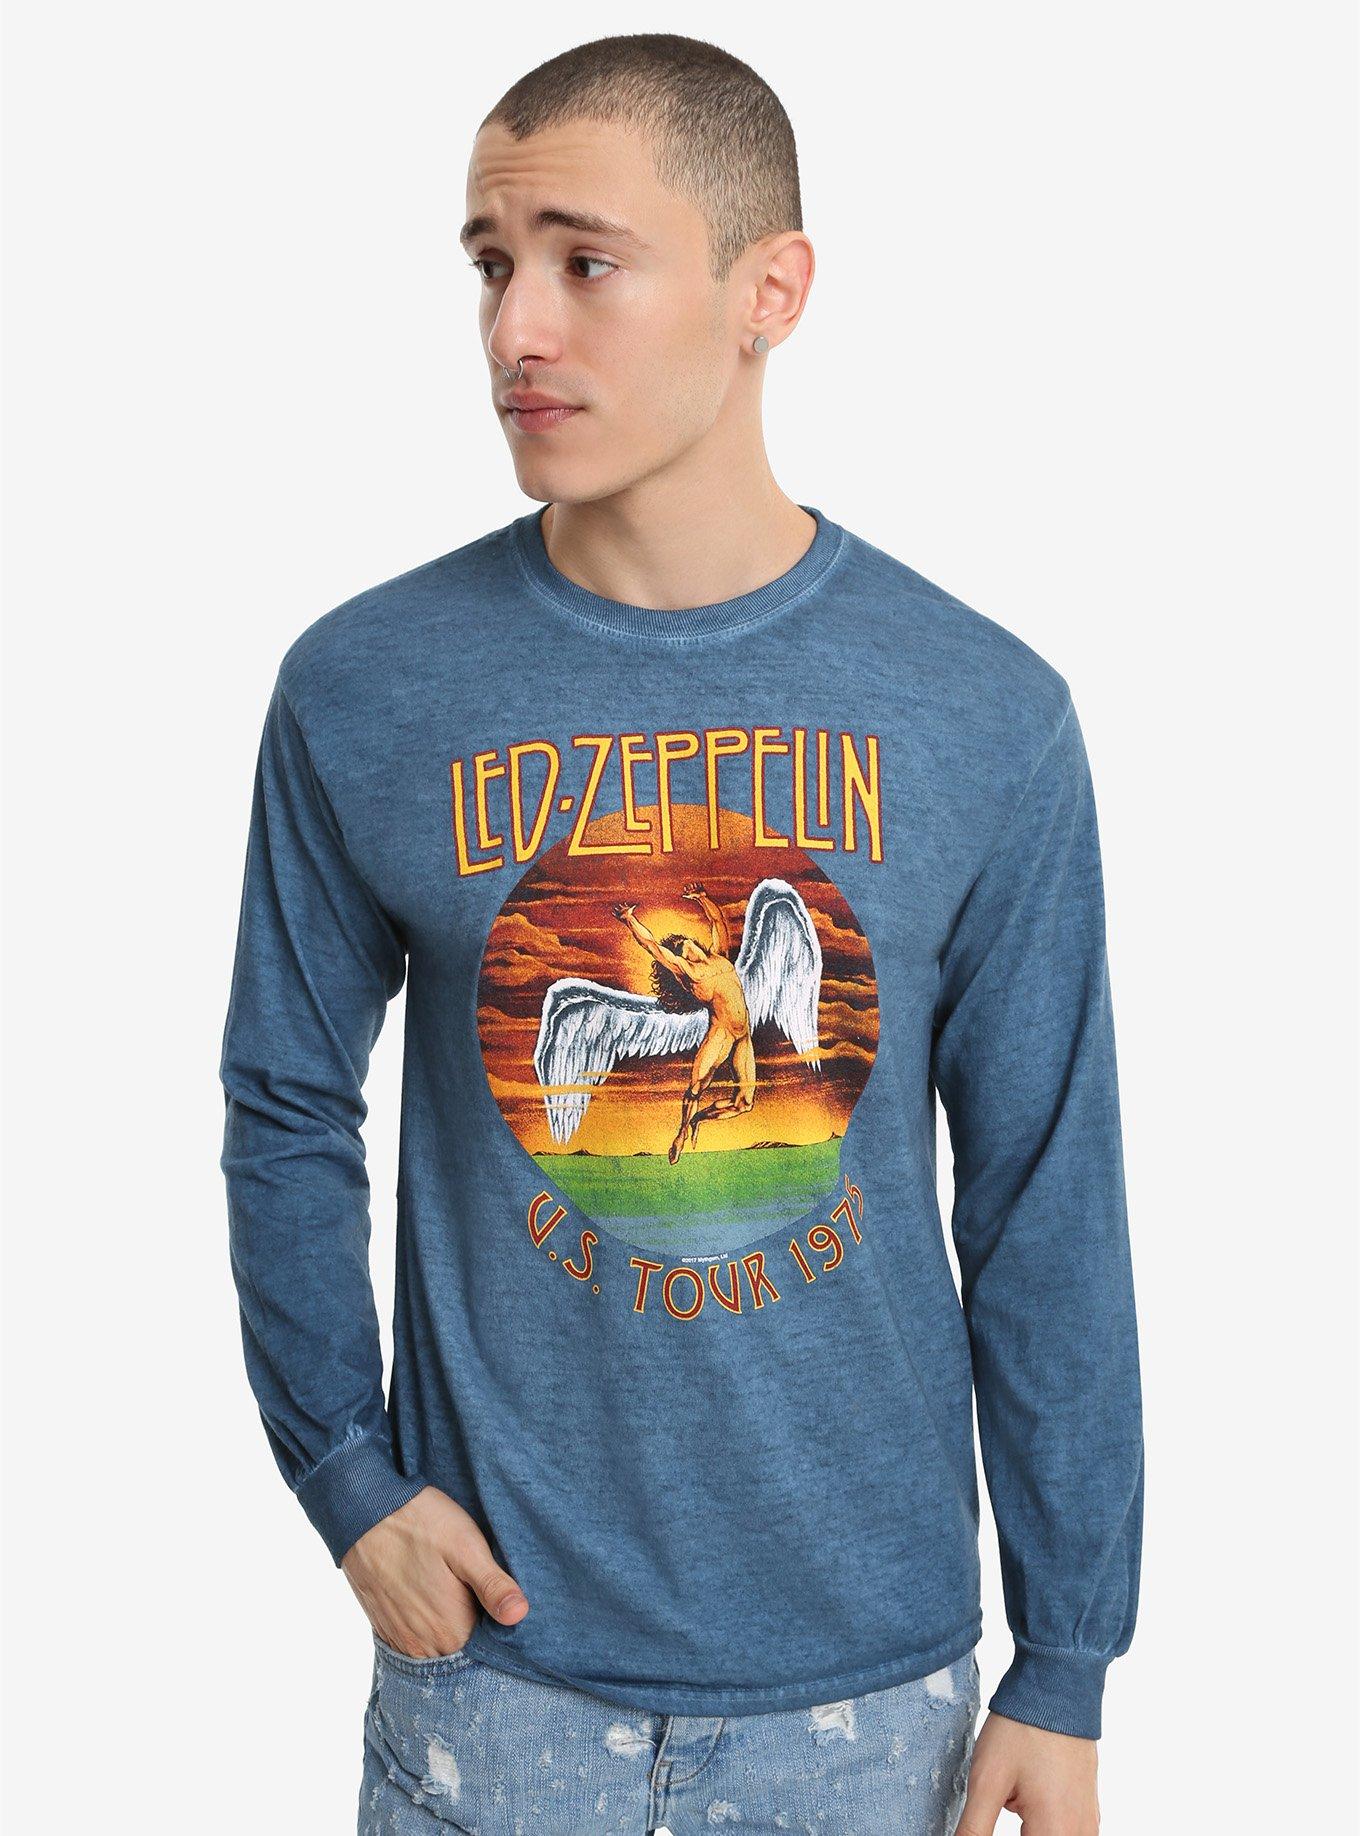 Led Zeppelin U.S. Tour 1975 Long-Sleeve T-Shirt, BLUE, hi-res